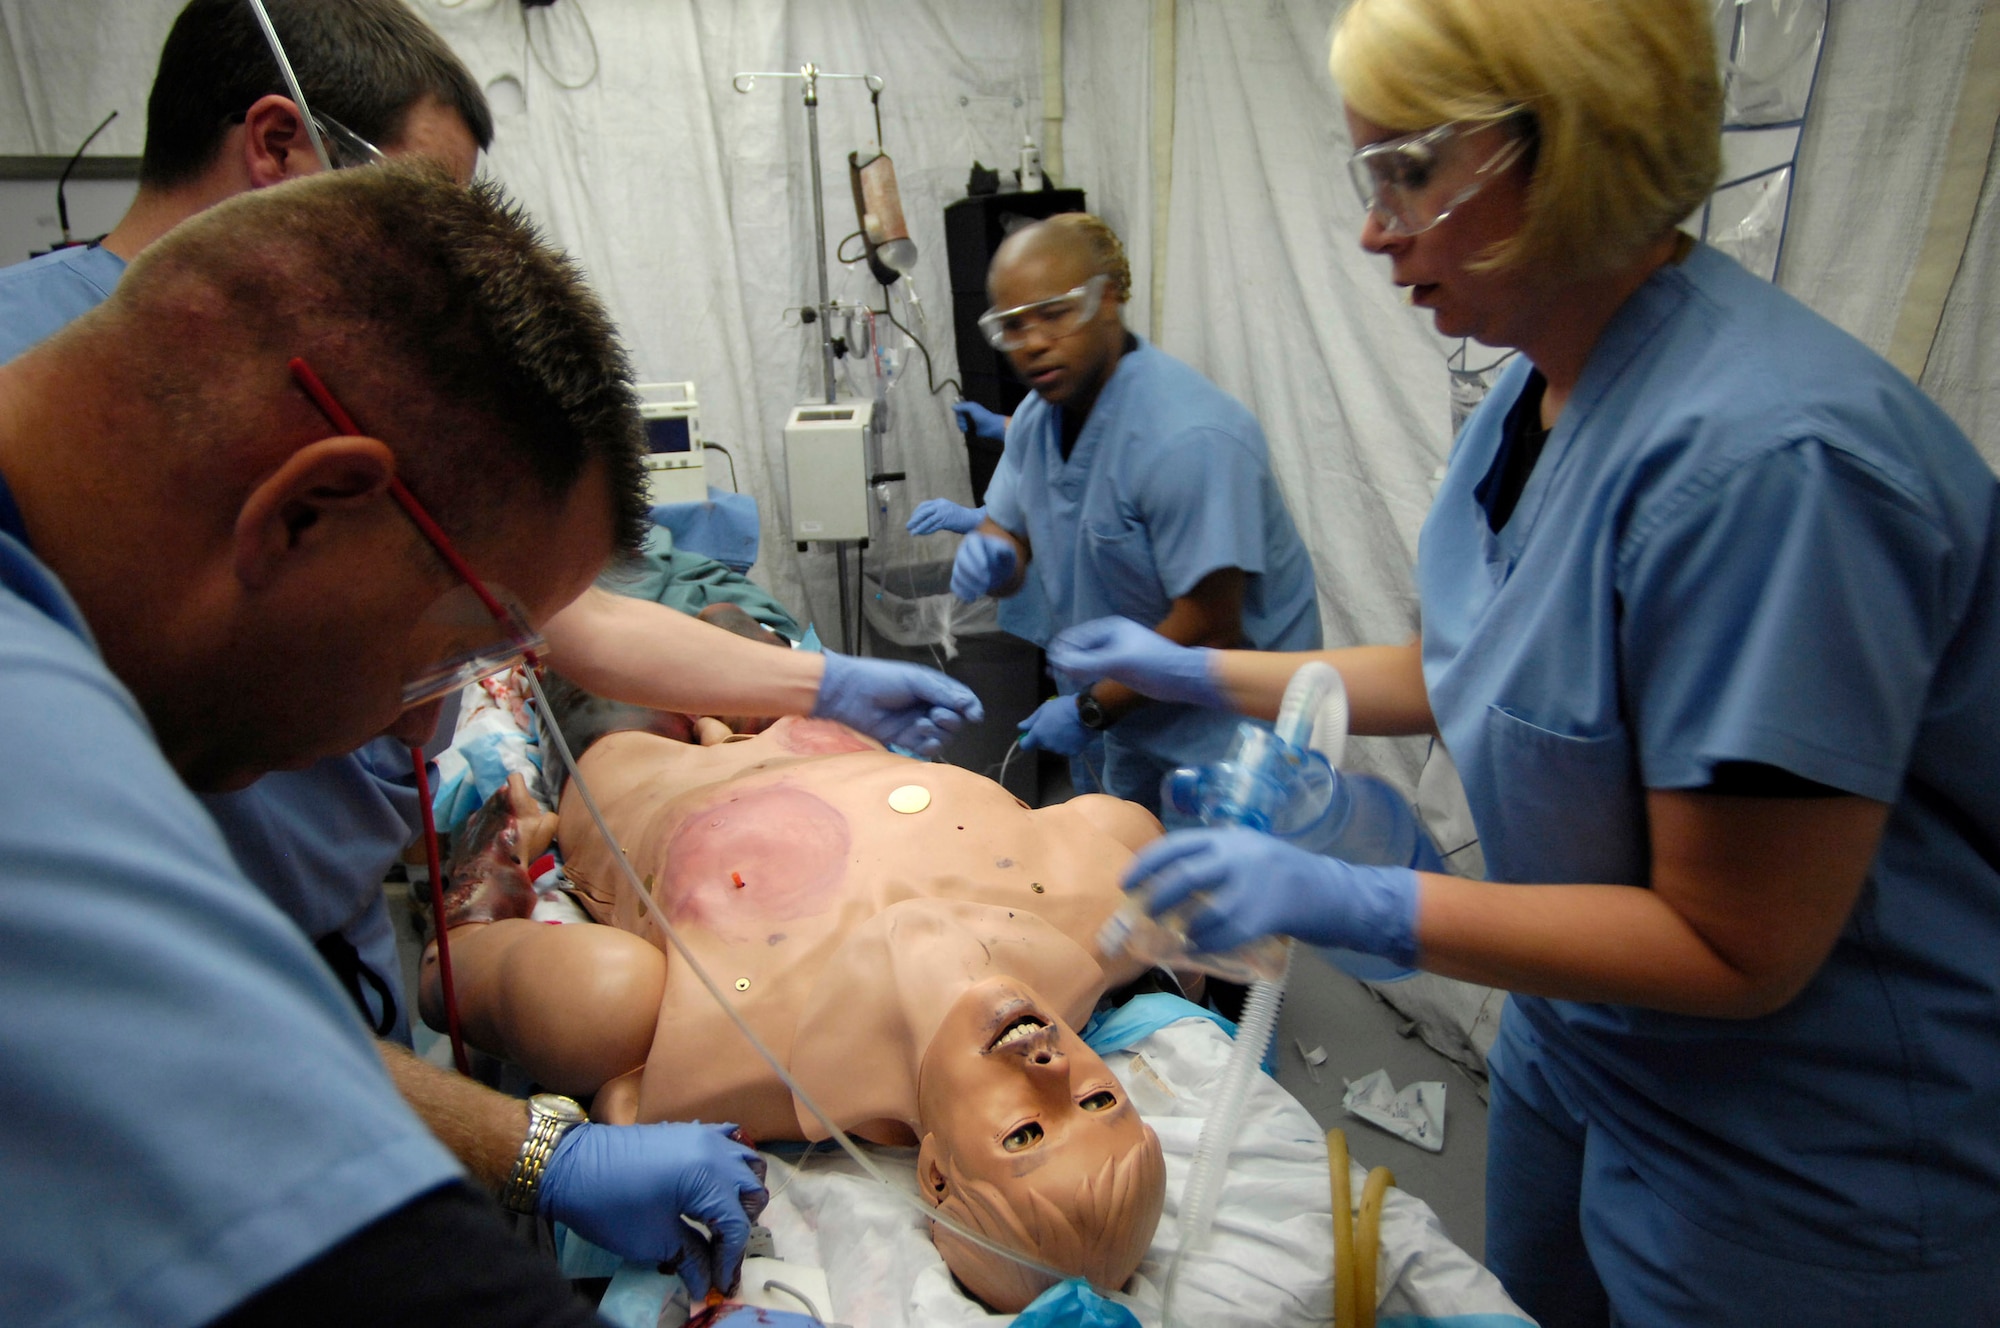 C-STARS Diverse trauma training saves livesu003e Air Force Medical Serviceu003e News hq nude picture